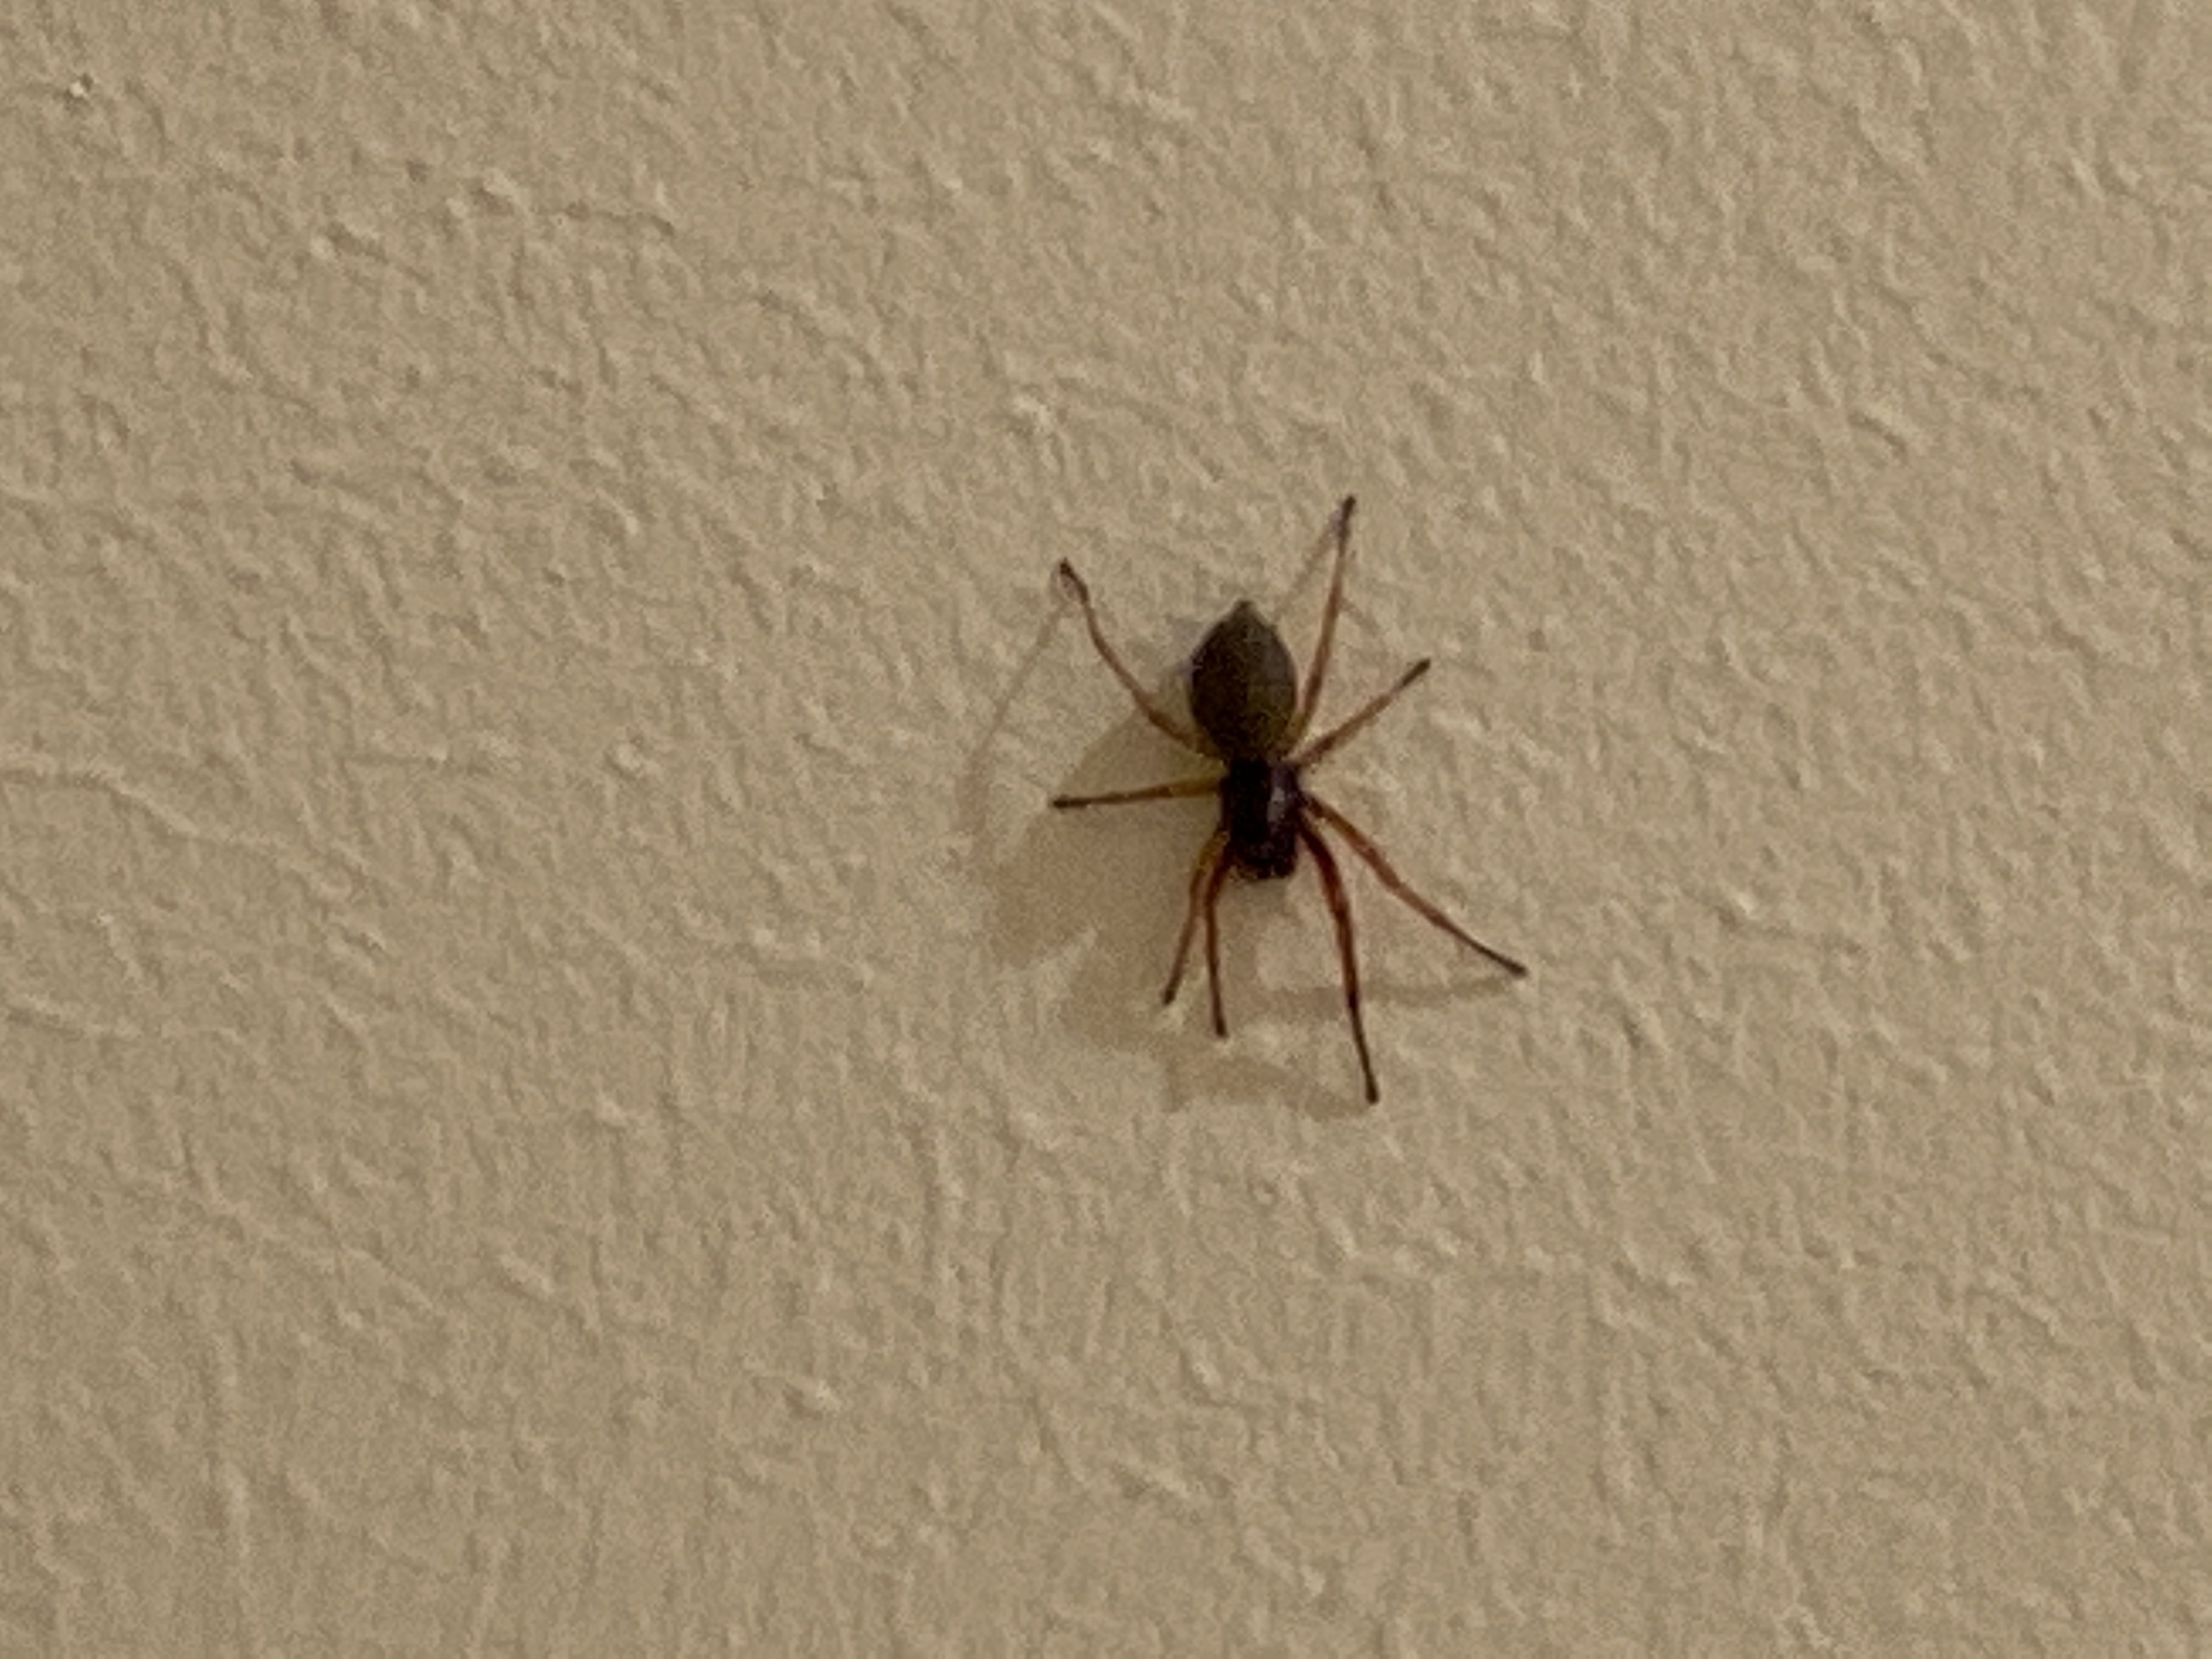 Unidentified spider in Massachusetts United States